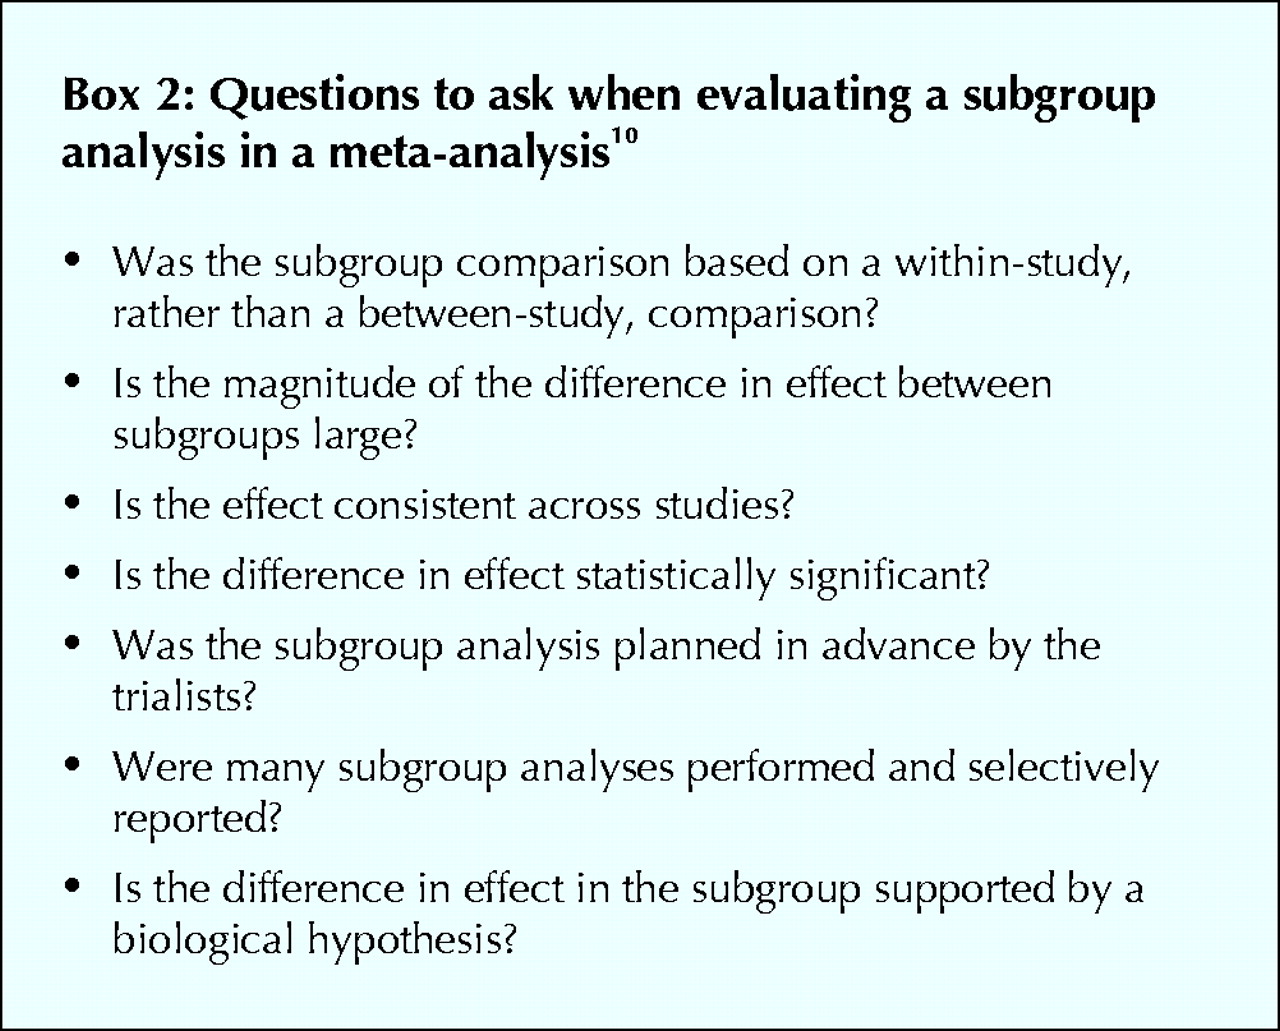 Subgroup analyses may be misleading - Students 4 Best Evidence